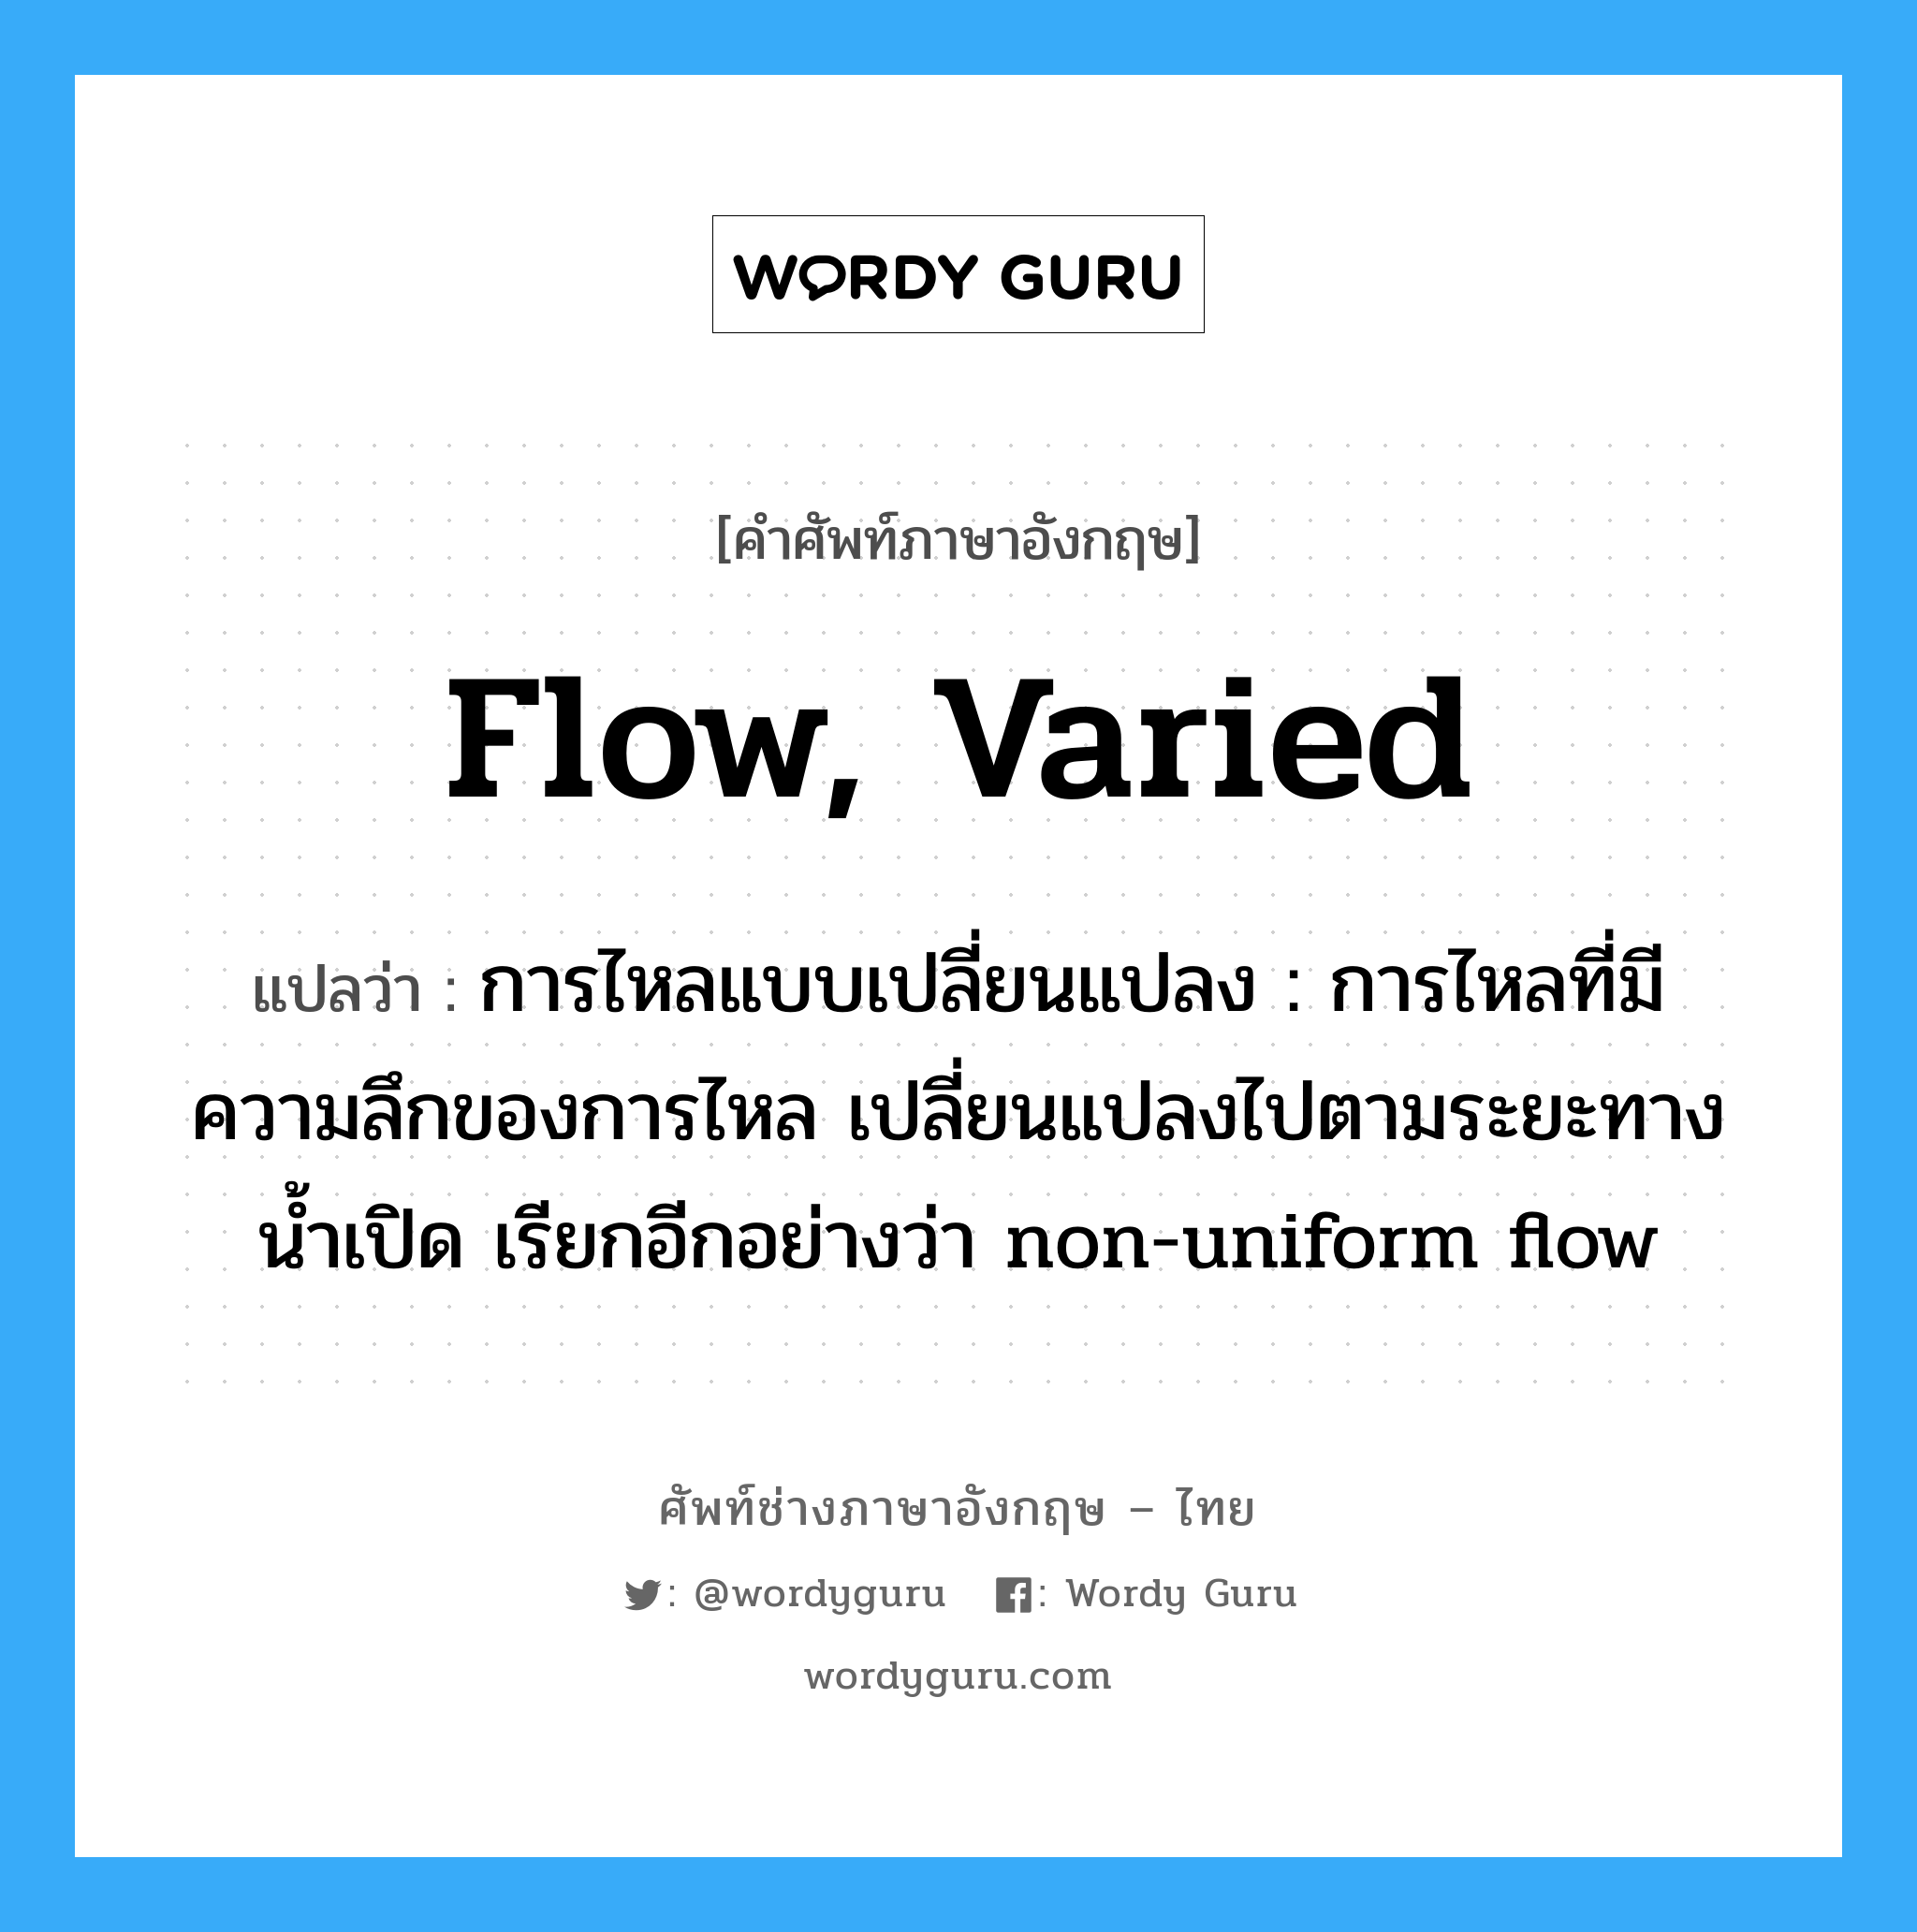 flow, varied แปลว่า?, คำศัพท์ช่างภาษาอังกฤษ - ไทย flow, varied คำศัพท์ภาษาอังกฤษ flow, varied แปลว่า การไหลแบบเปลี่ยนแปลง : การไหลที่มีความลึกของการไหล เปลี่ยนแปลงไปตามระยะทางน้ำเปิด เรียกอีกอย่างว่า non-uniform flow